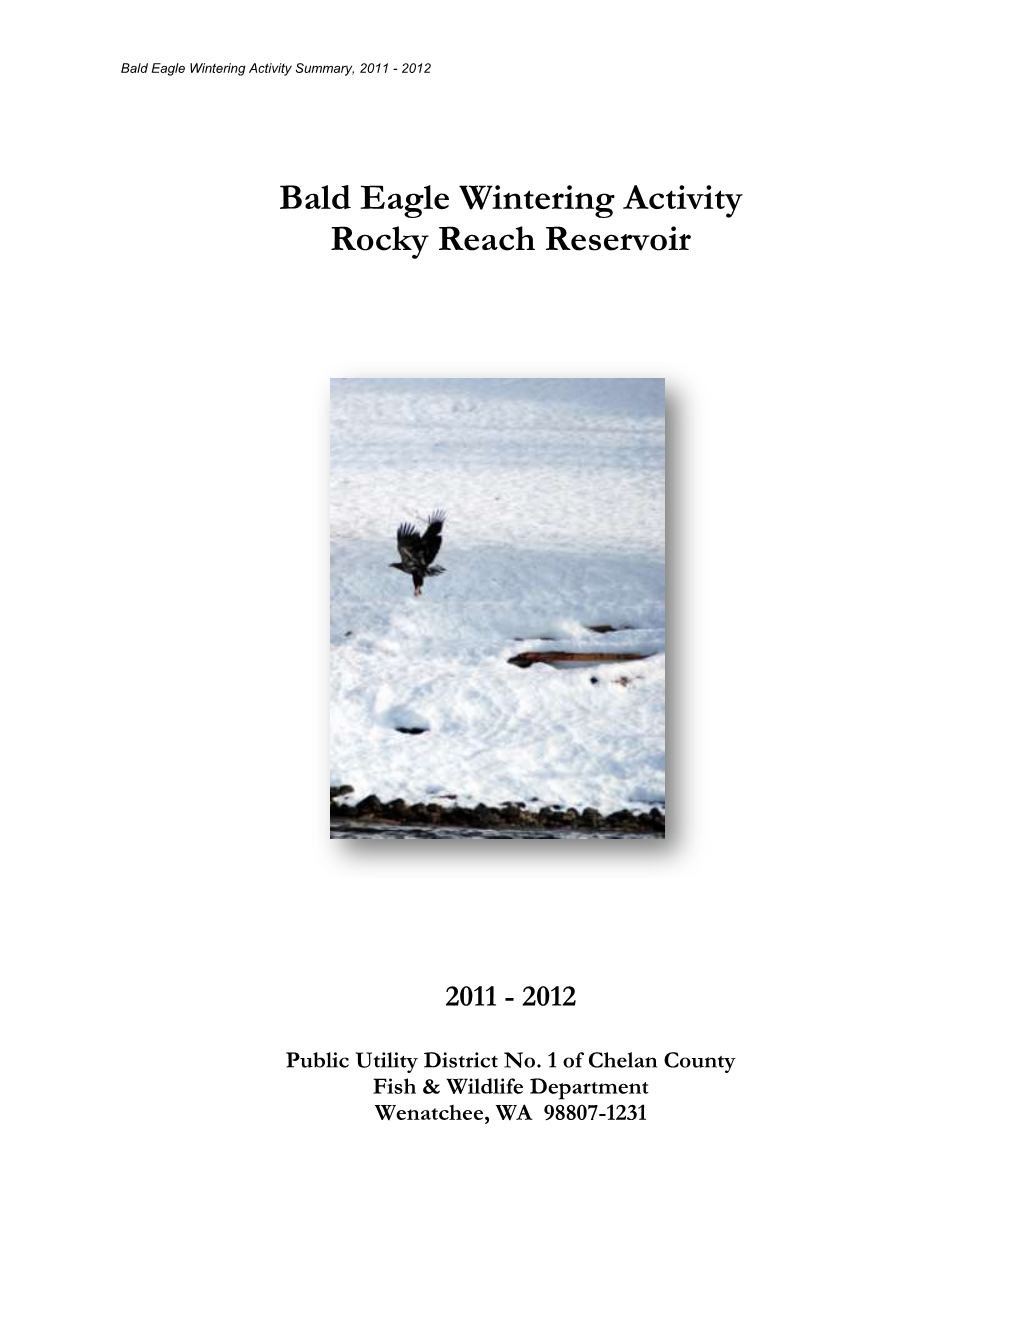 Bald Eagle Wintering Activity Rocky Reach Reservoir